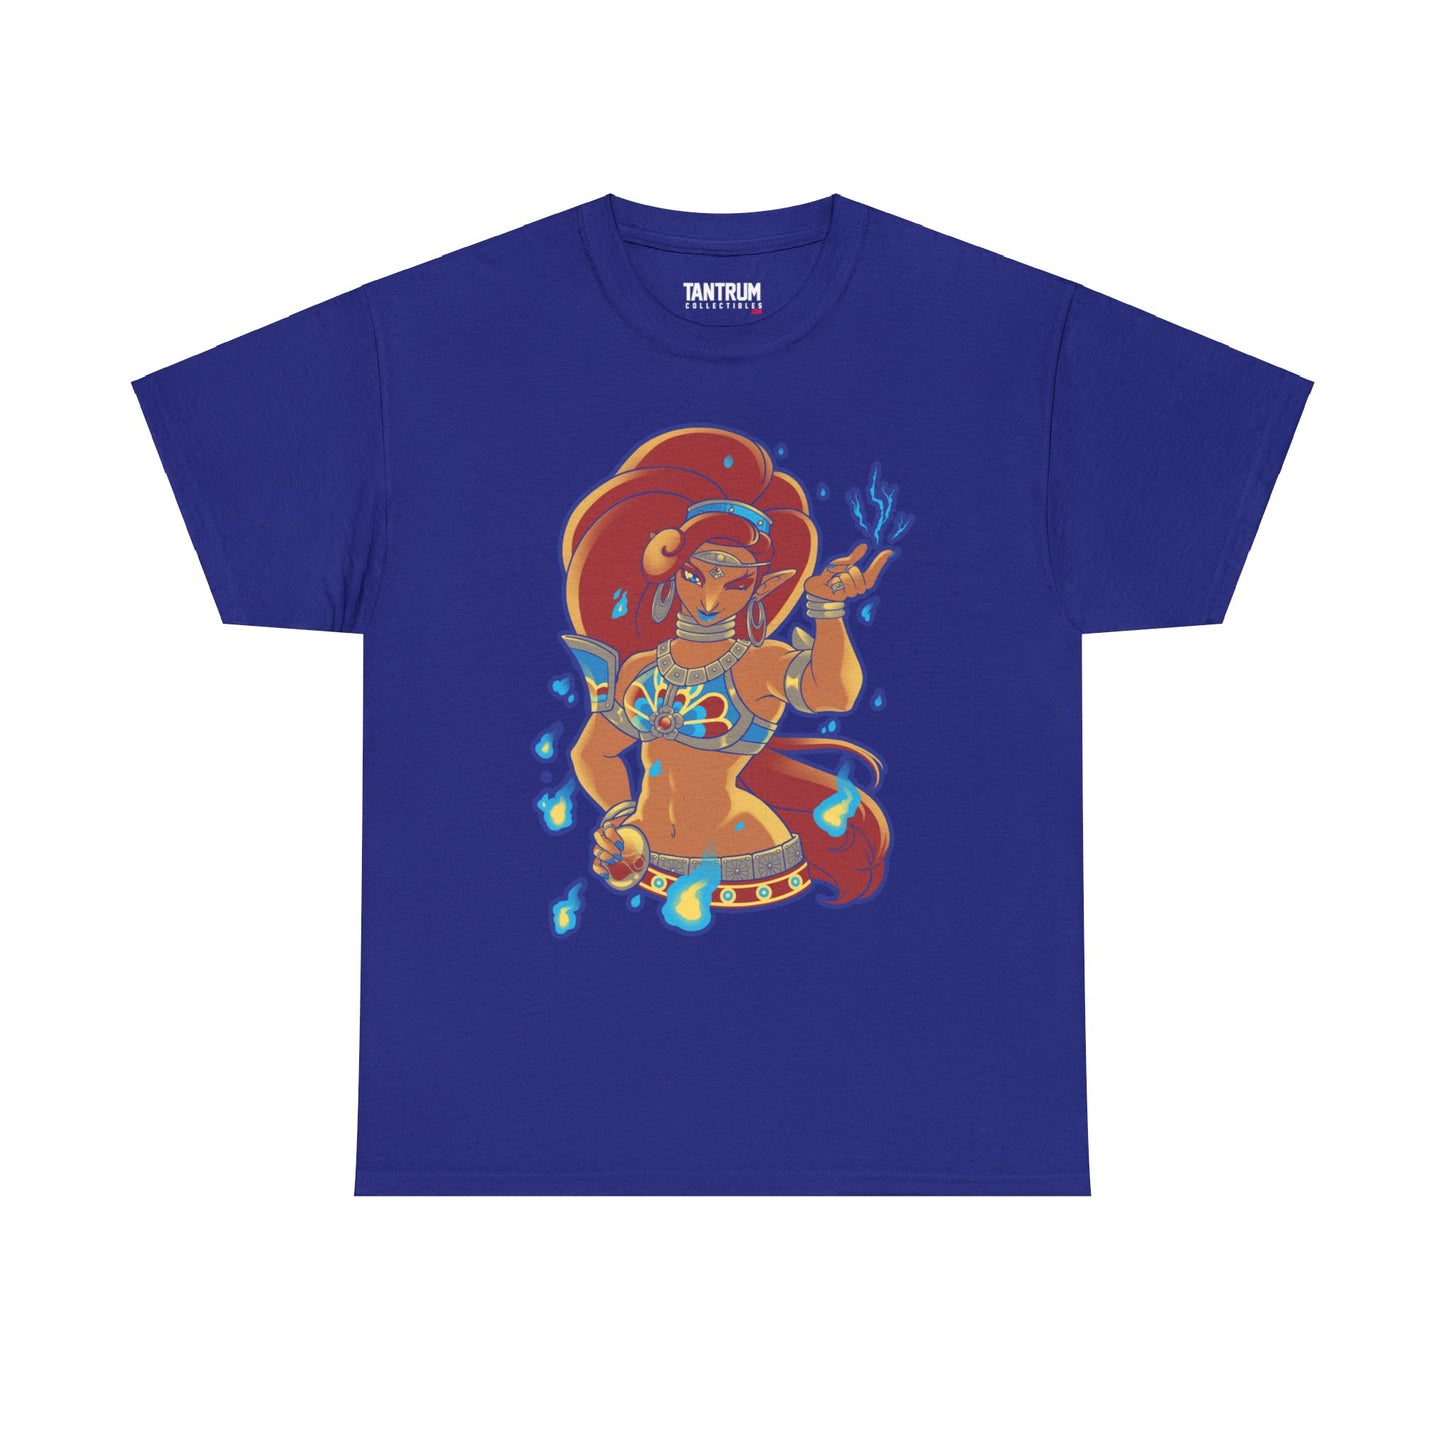 Zeldathon - Unisex T-Shirt - Urbosa (Zeldathon Dimensions Exclusive)